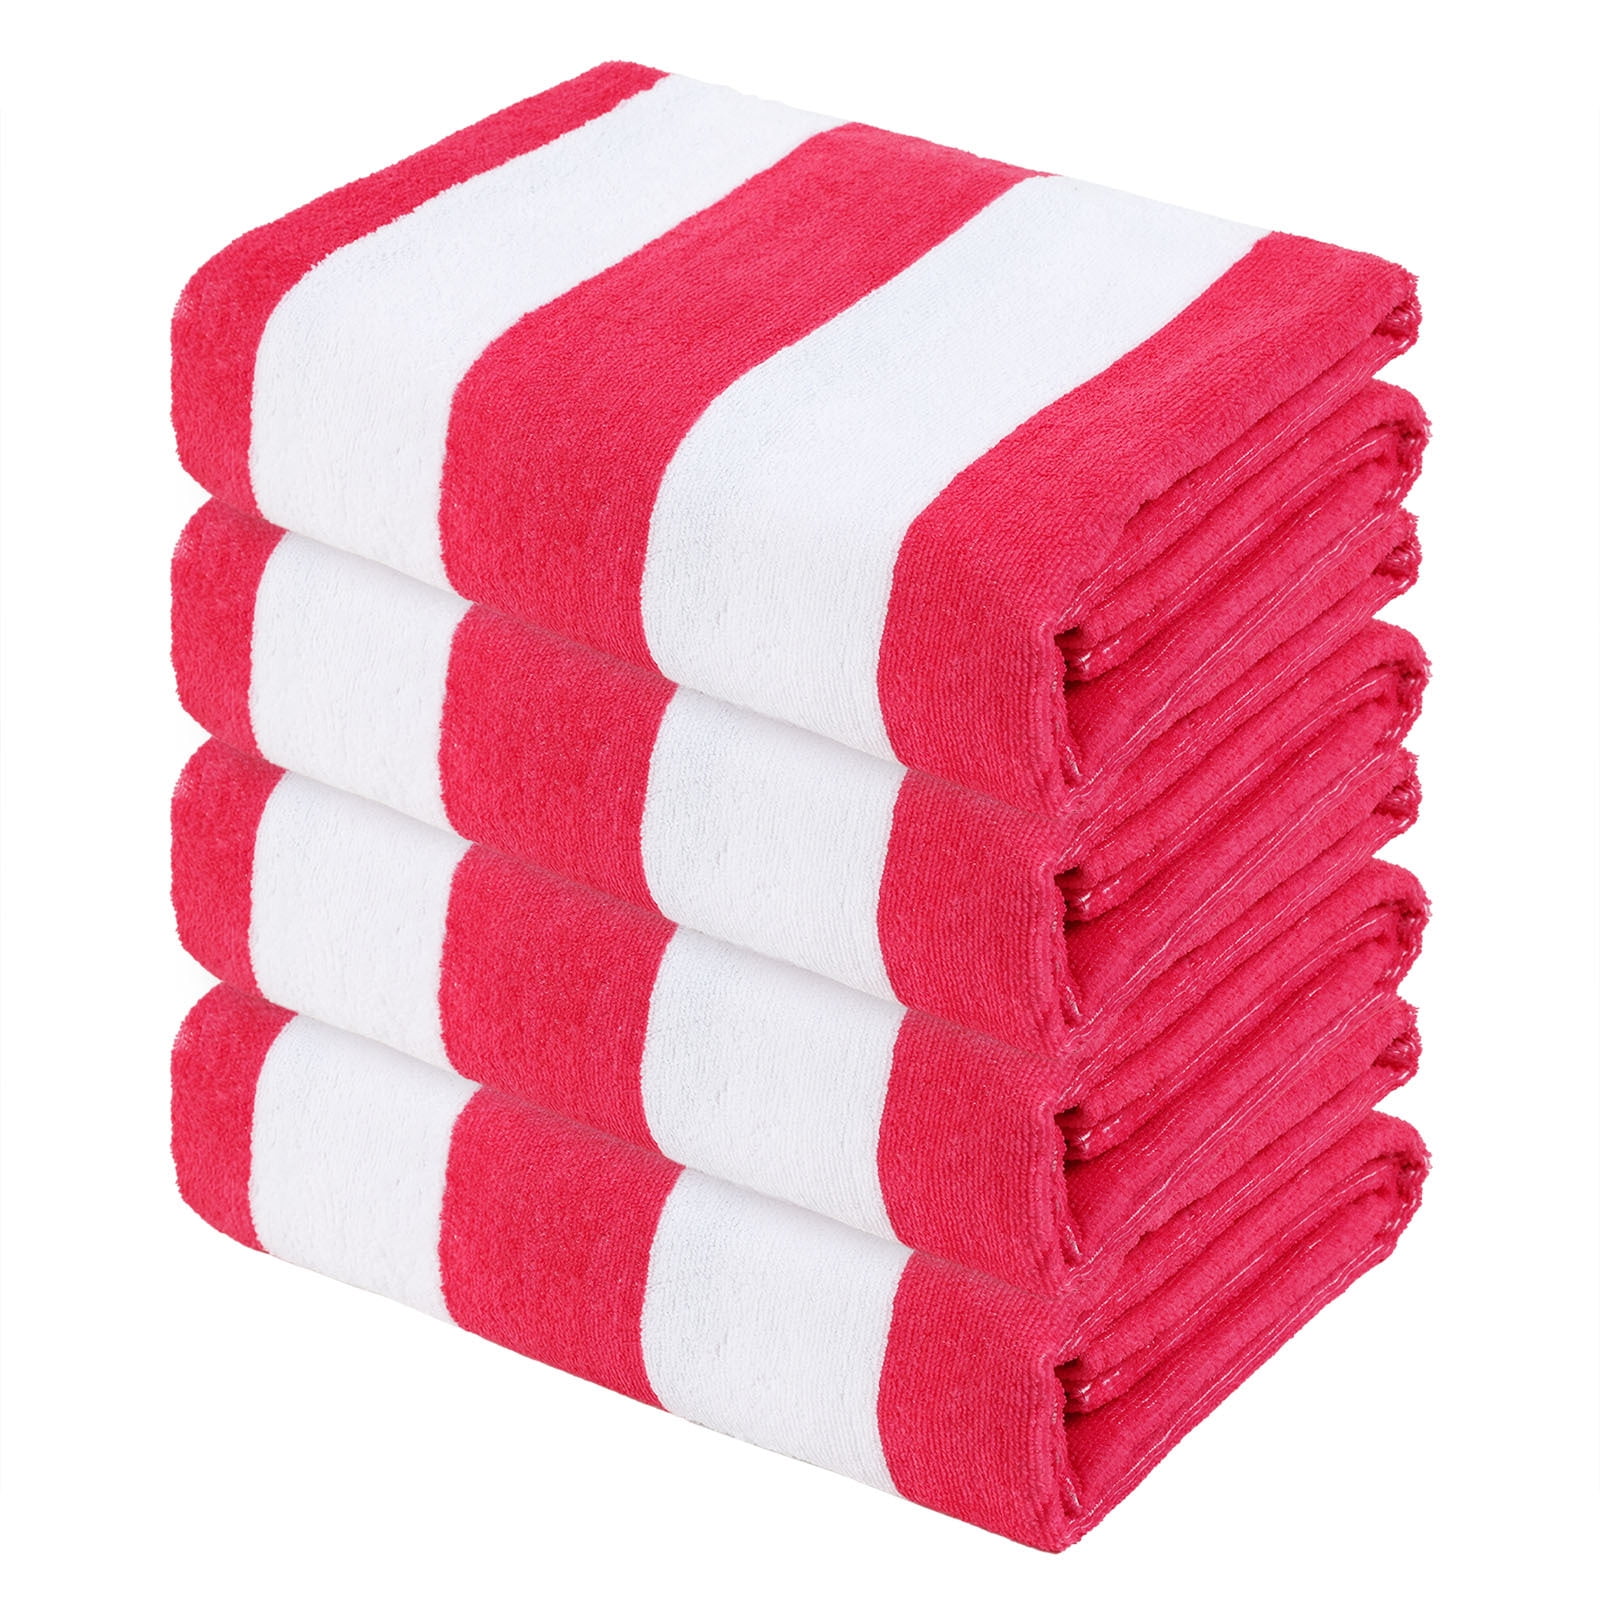 80*135 Bath Large towels For Body Microfiber Bath Towels For Home Women  Bathrobes Fast Drying Beach Spa Hair Hand Cloth Dryer